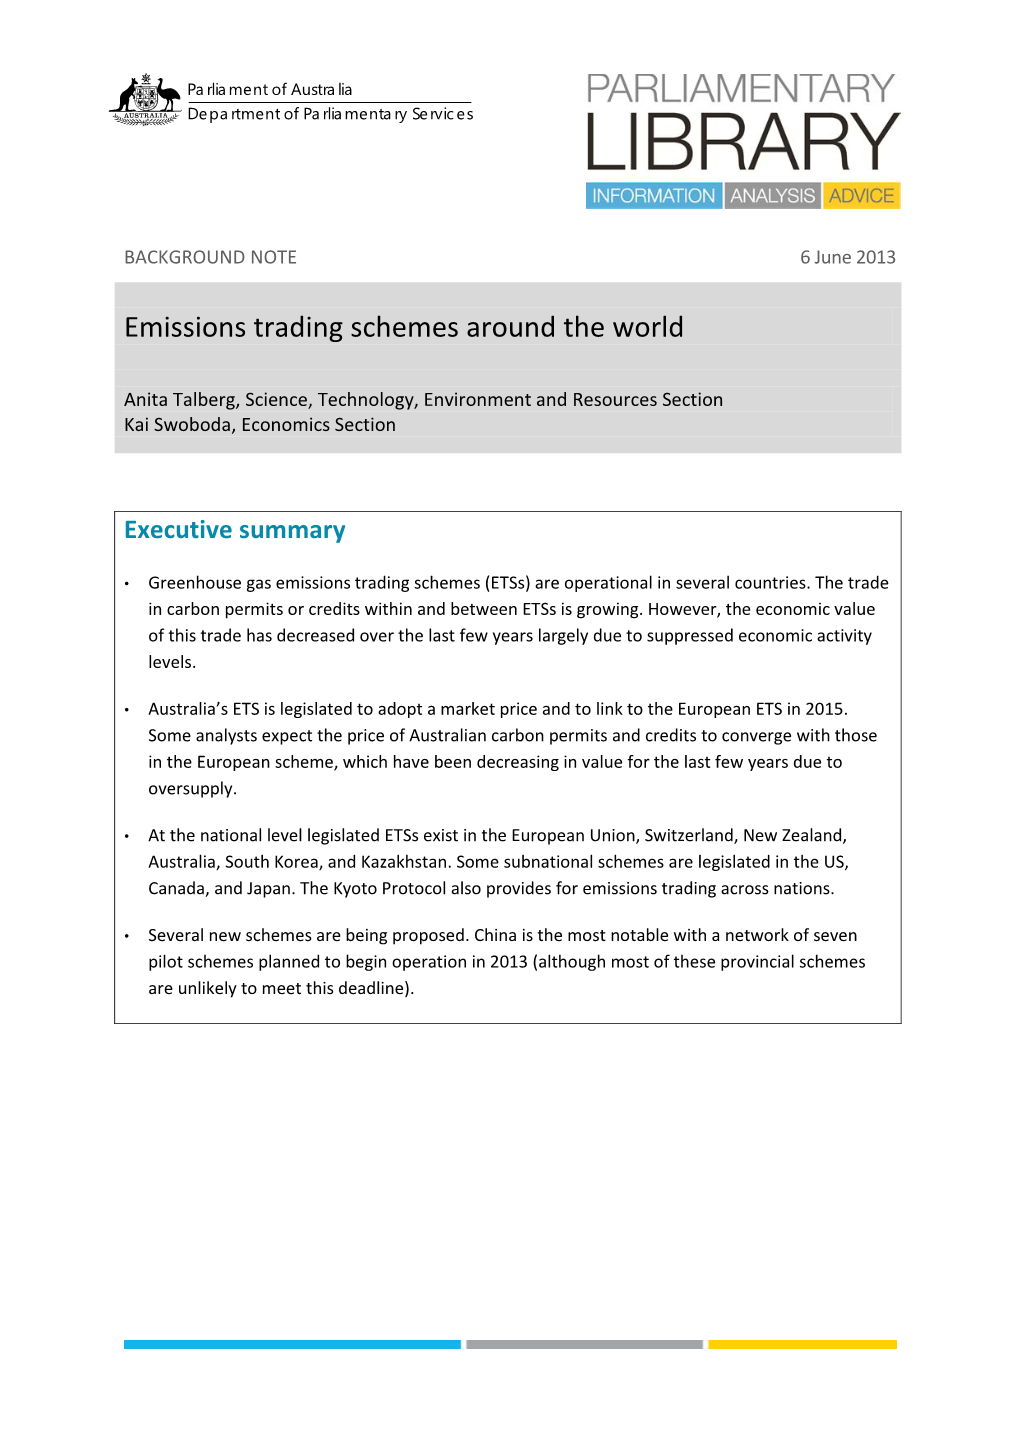 Emissions Trading Schemes Around the World